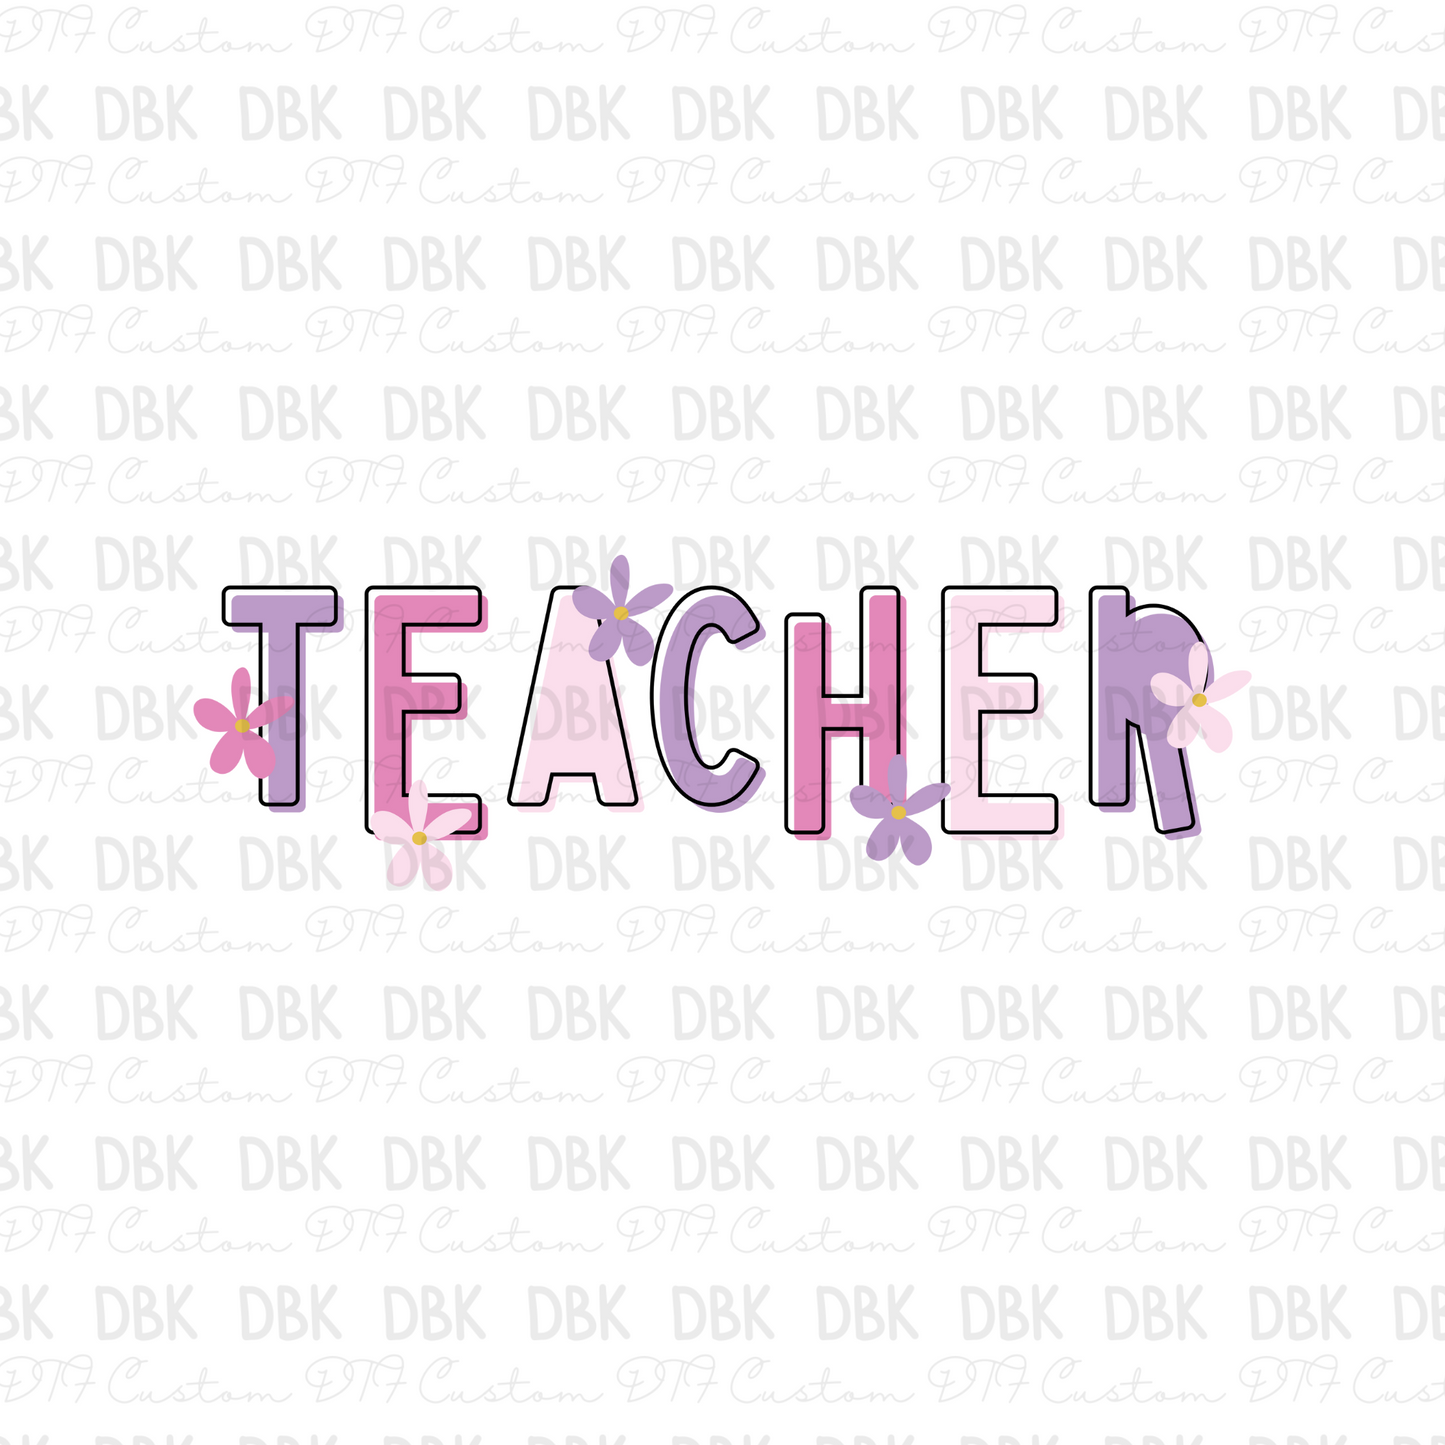 Teacher DTF Transfer A73